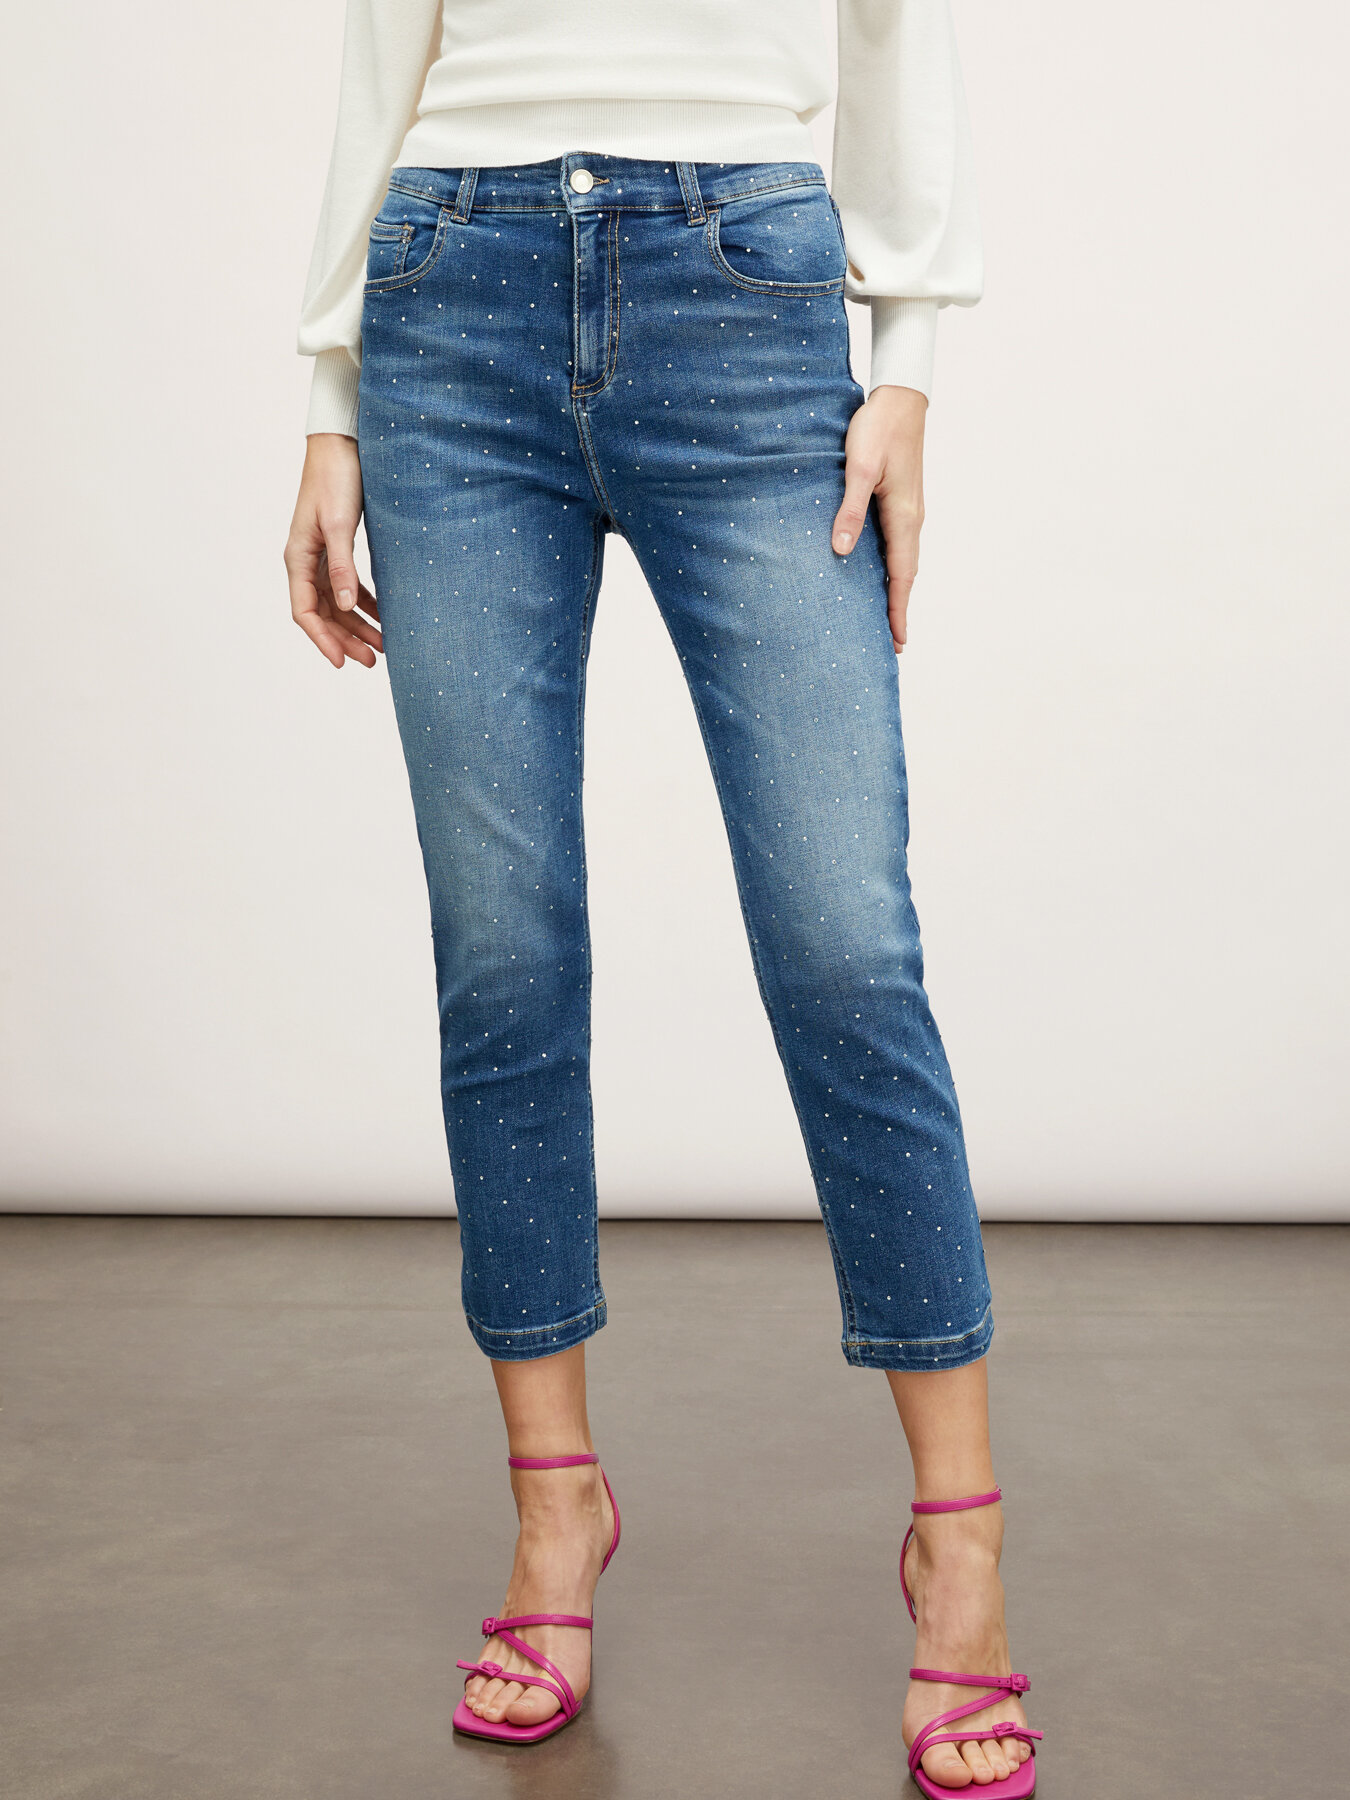 Skinny-Jeans komplett mit Strass besetzt image number 0